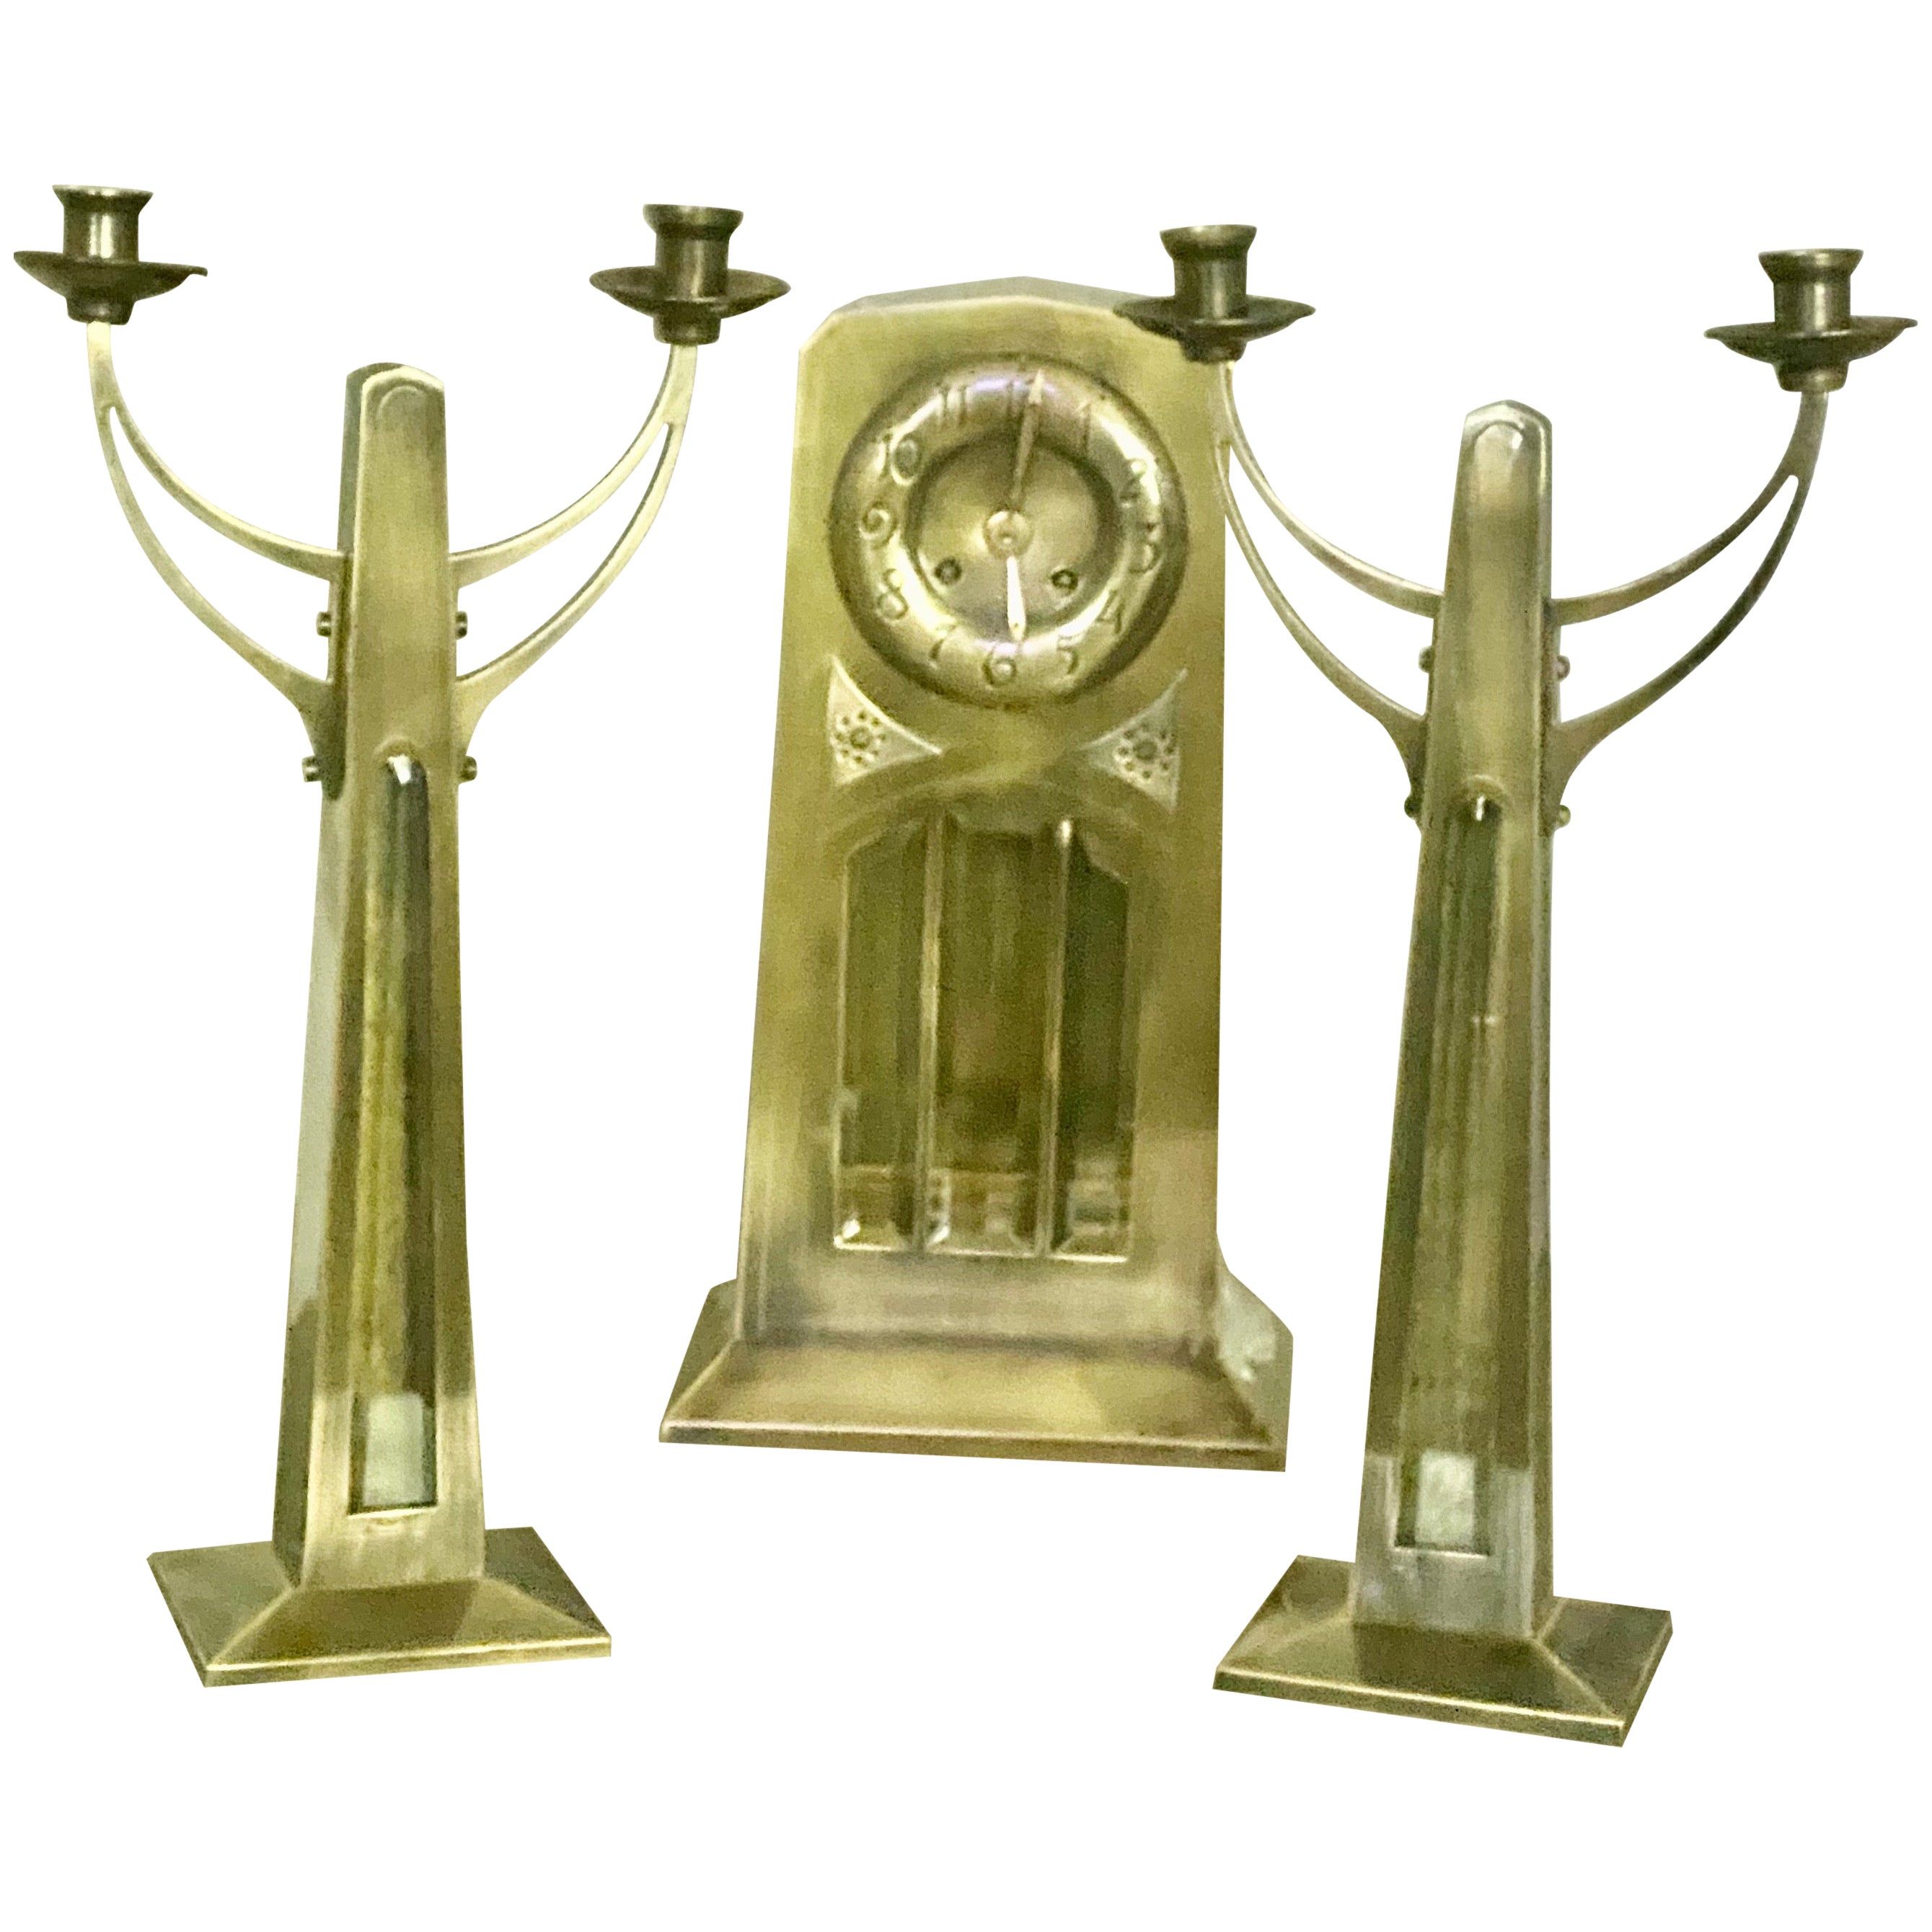 Superb Art Nouveau 3 Piece Clock Set with a Brass Case and Bevelled Glass